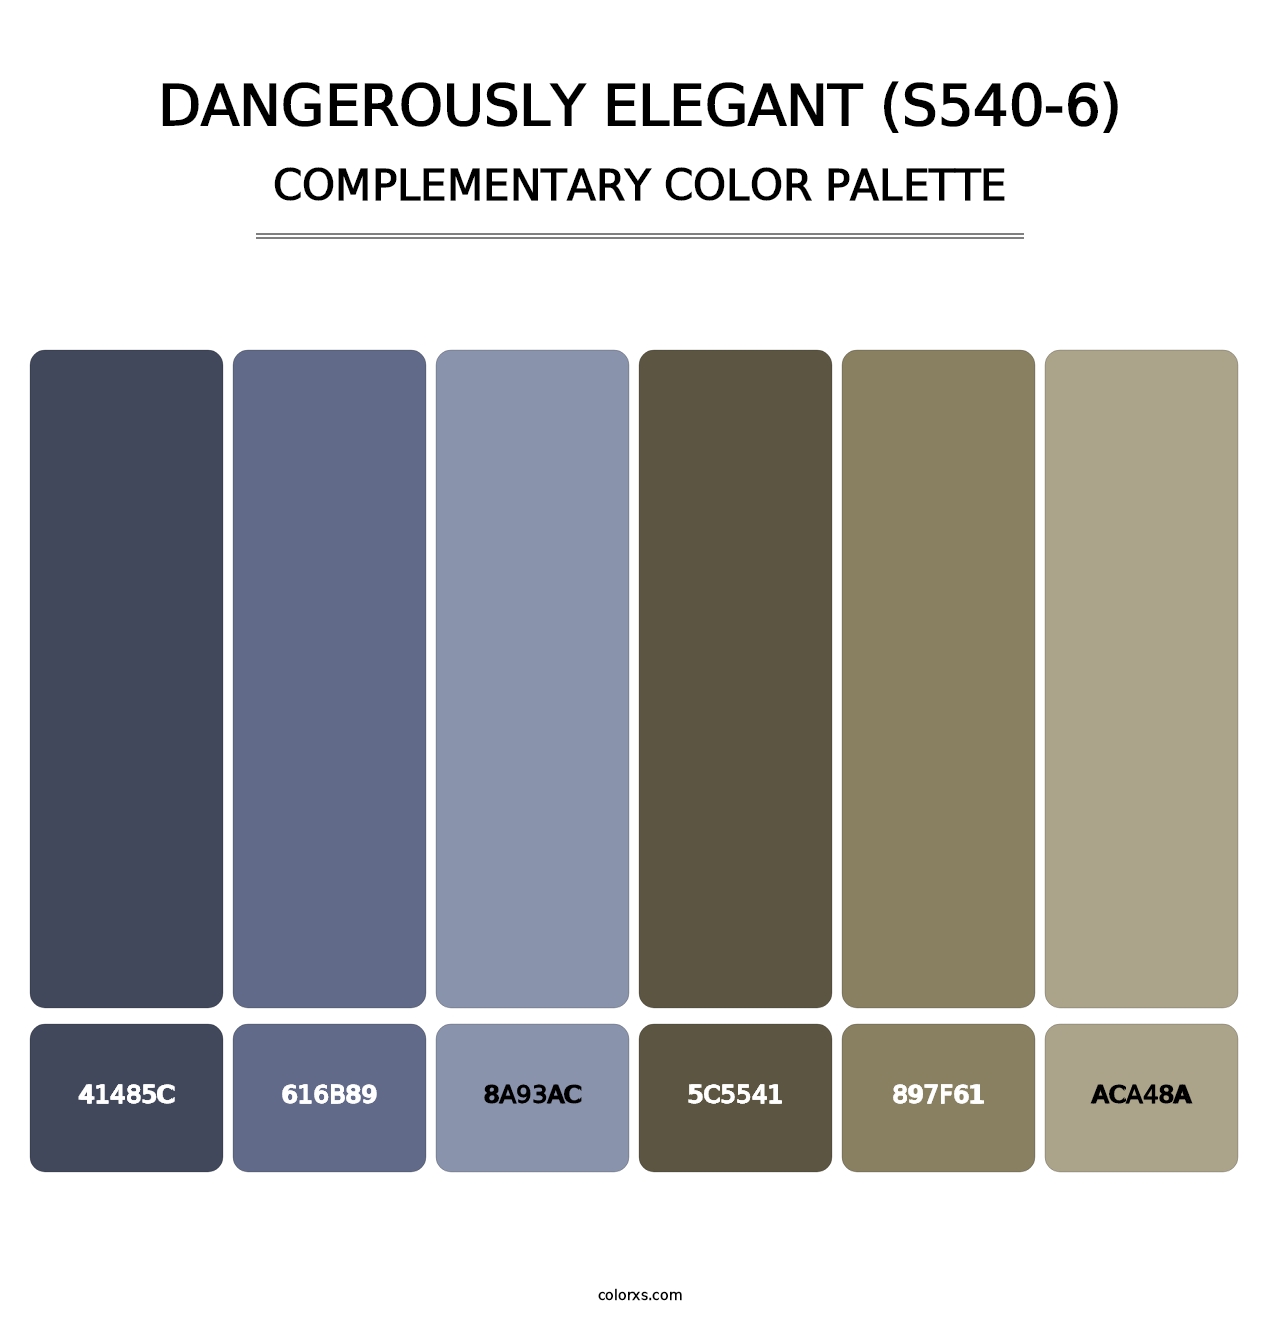 Dangerously Elegant (S540-6) - Complementary Color Palette